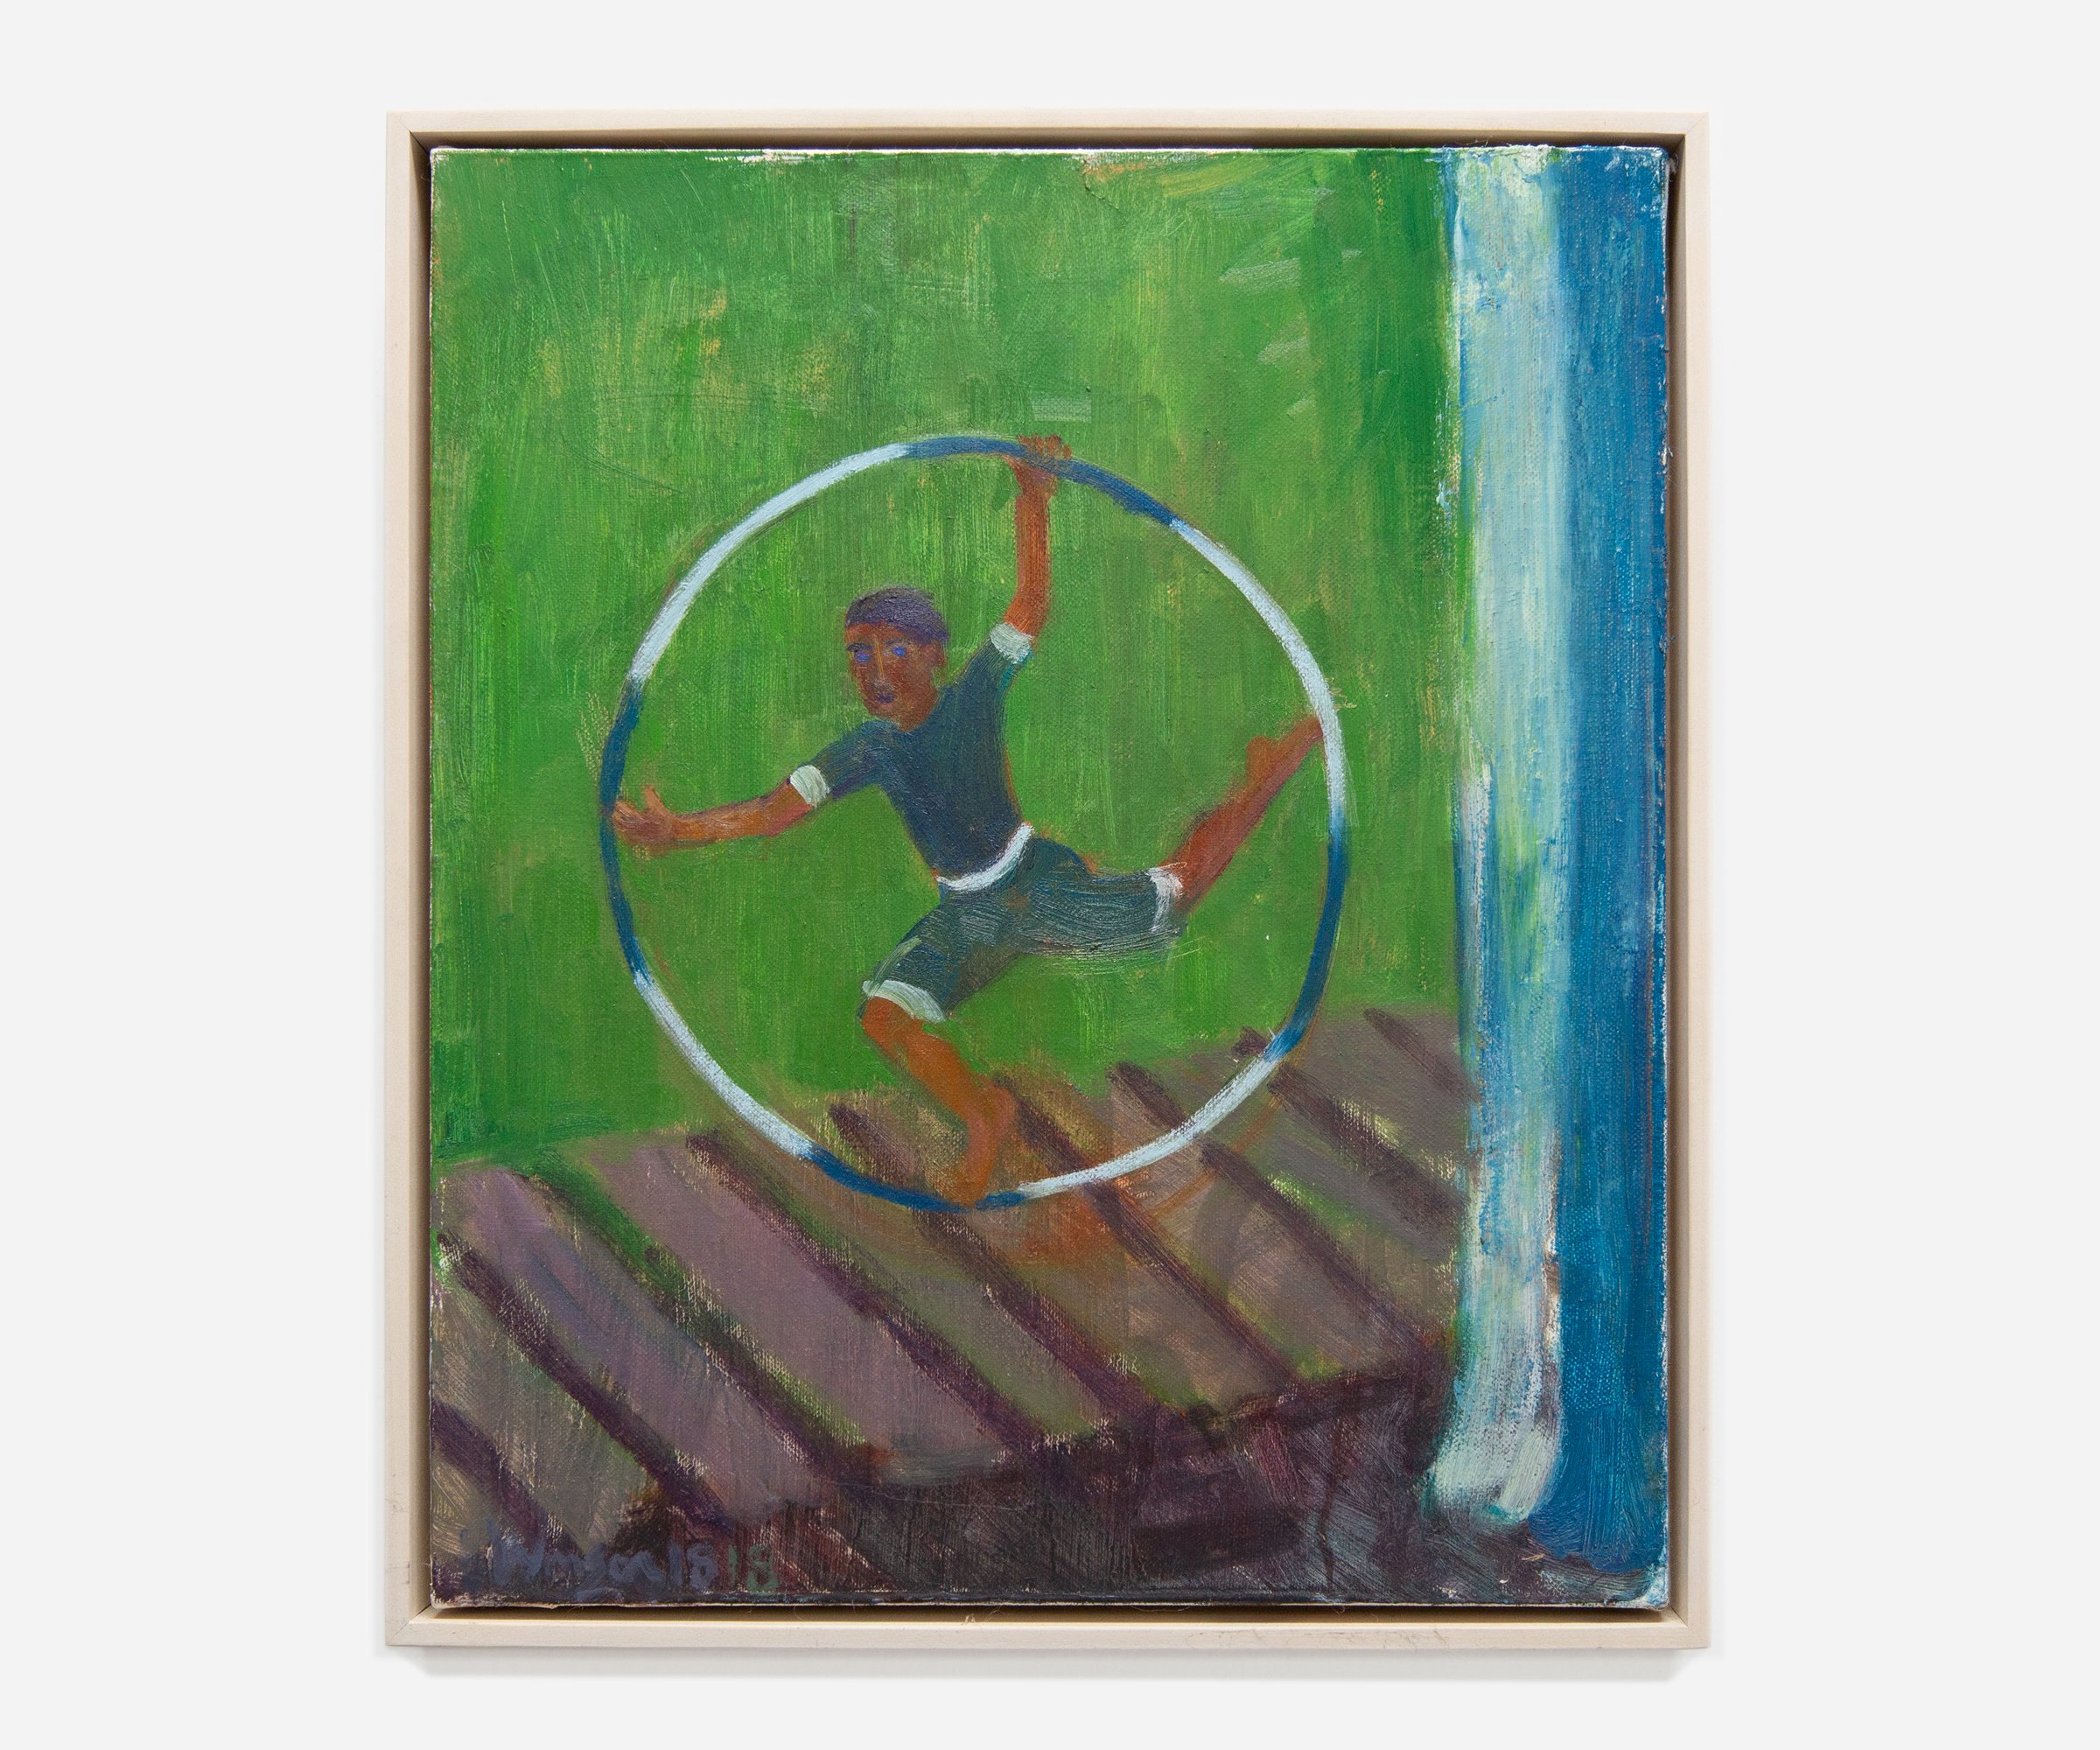   Hoop Dancer , 2019, Oil on canvas, 14 x 12”       